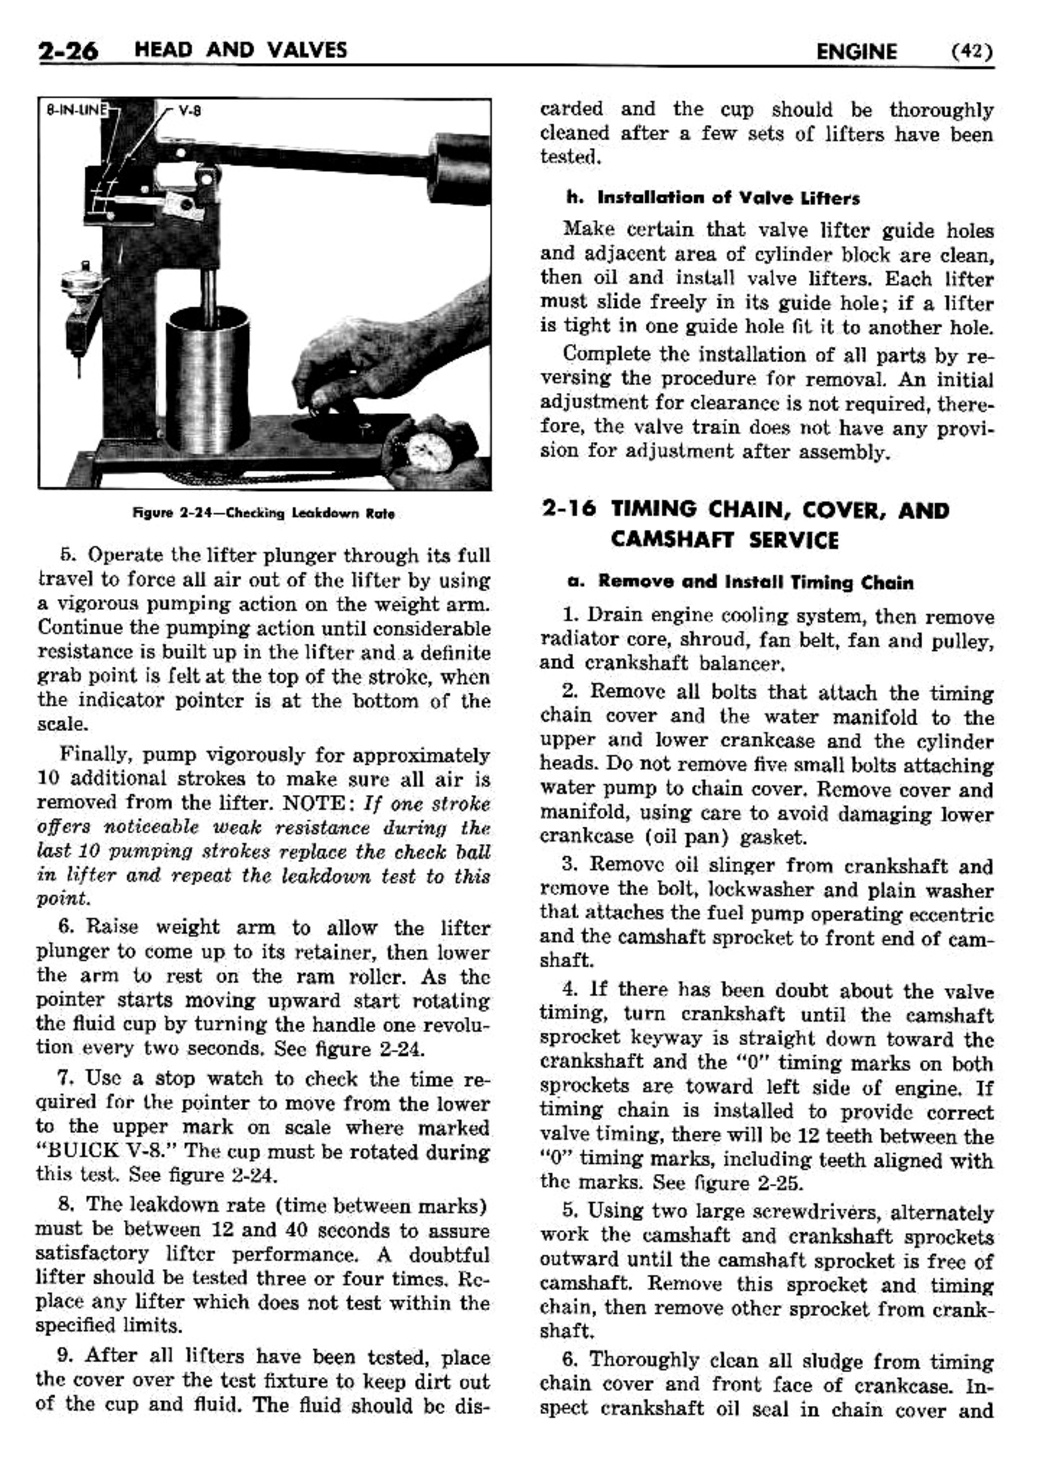 n_03 1956 Buick Shop Manual - Engine-026-026.jpg